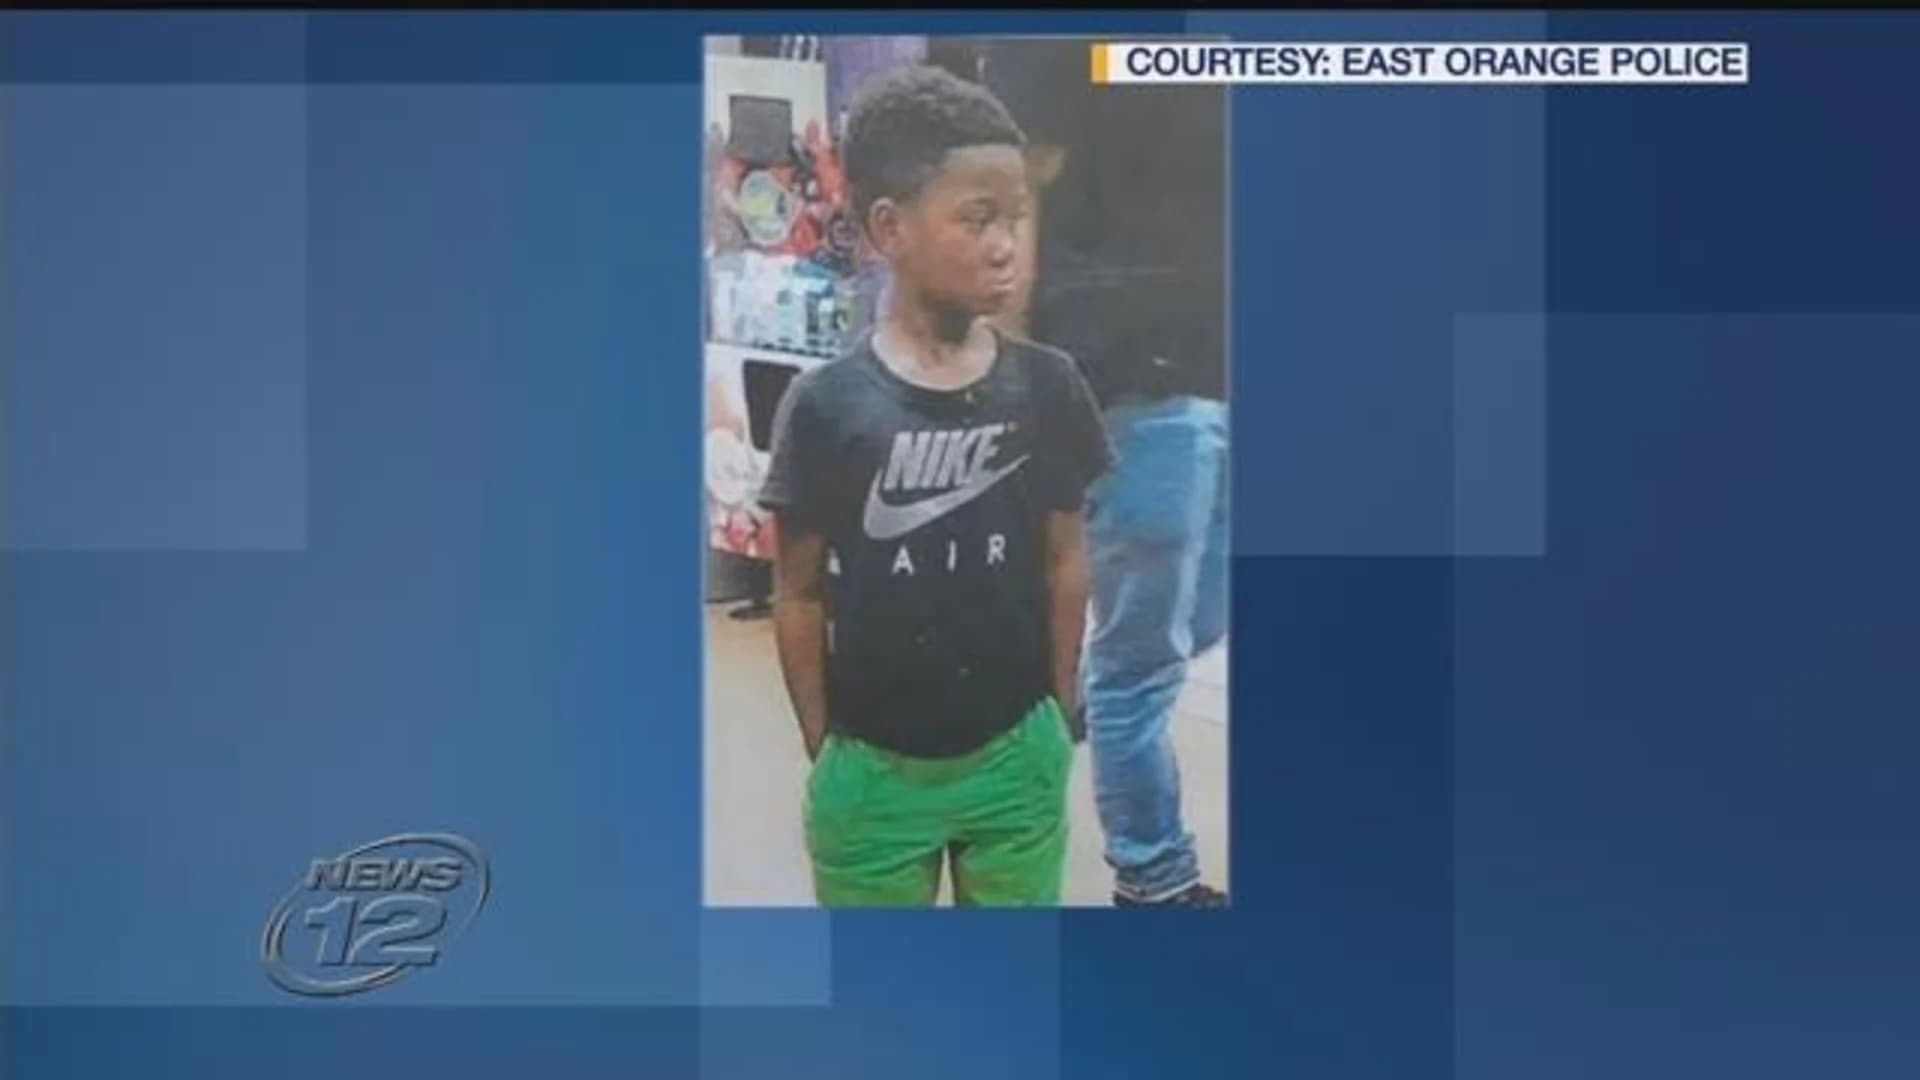 Officials: Missing 8-year-old Newark boy found safe